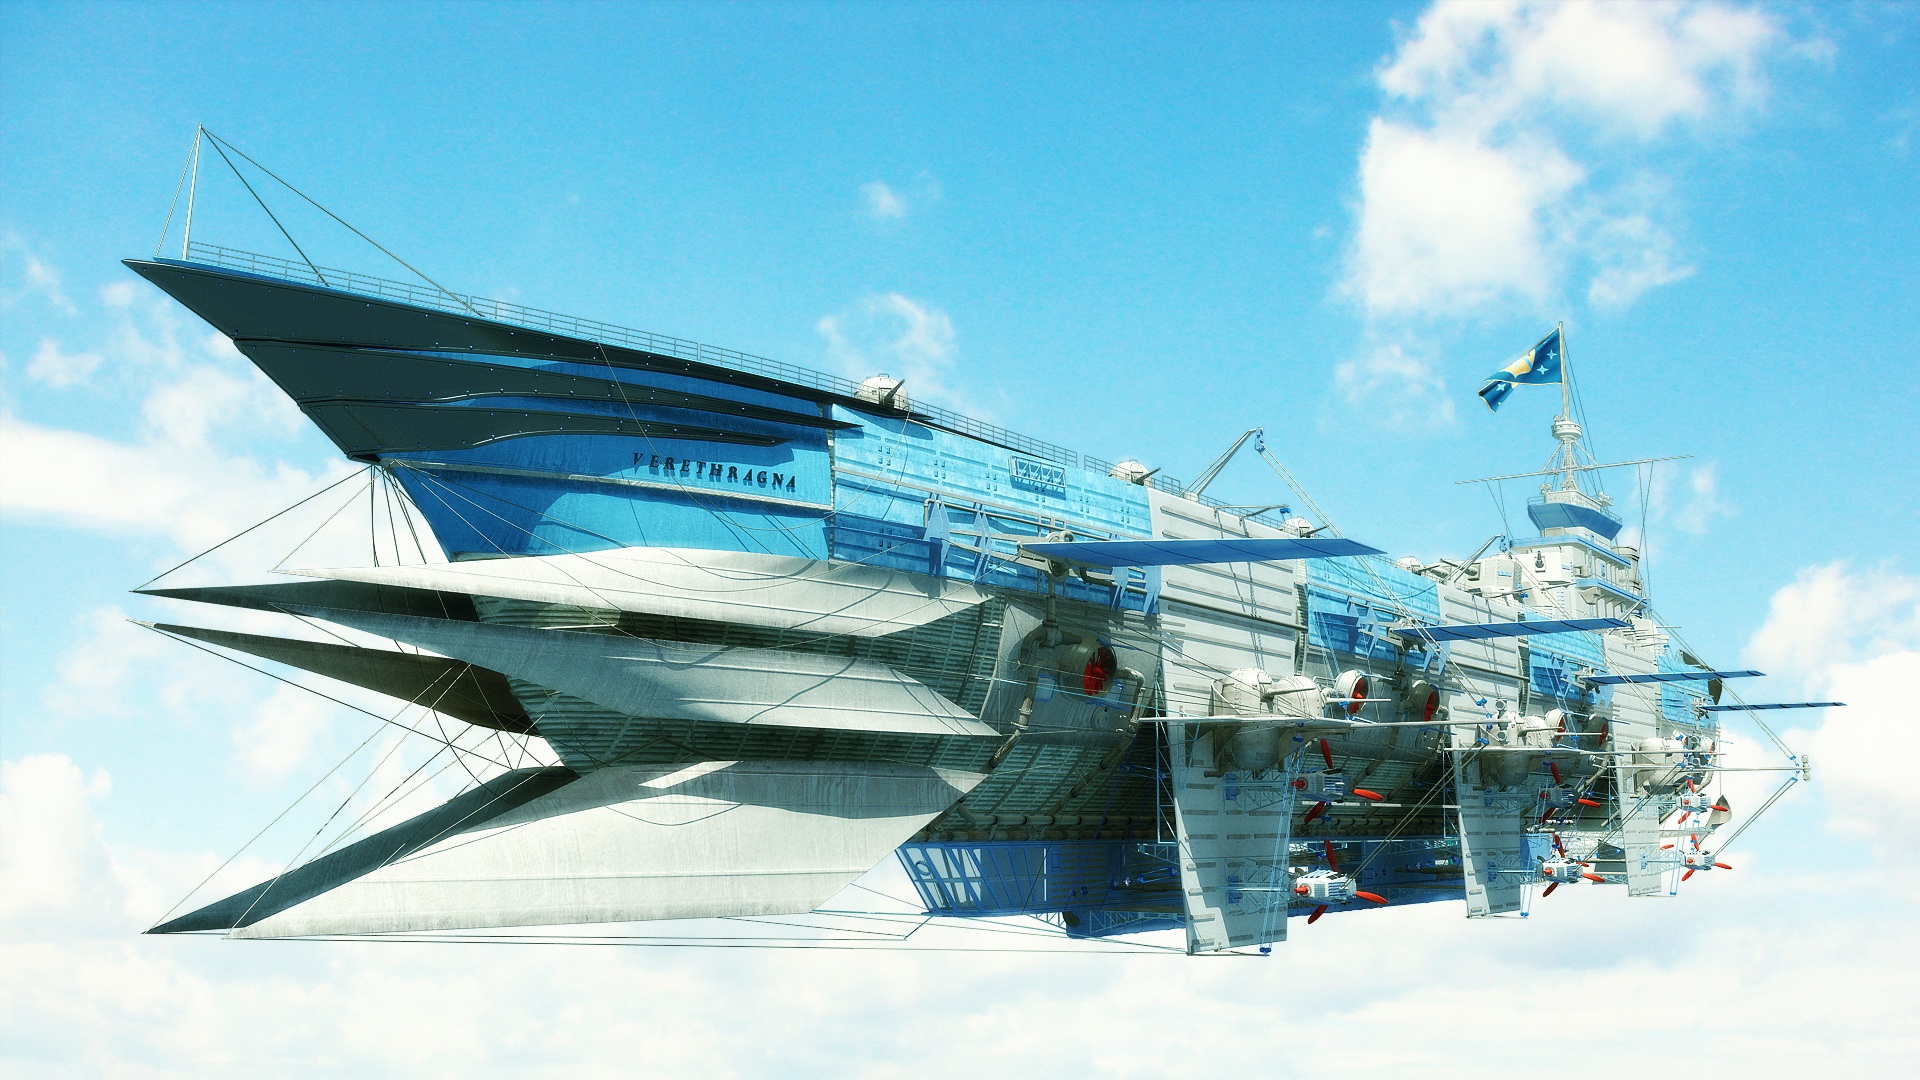 Download 8k Anime Futuristic Airship Wallpaper